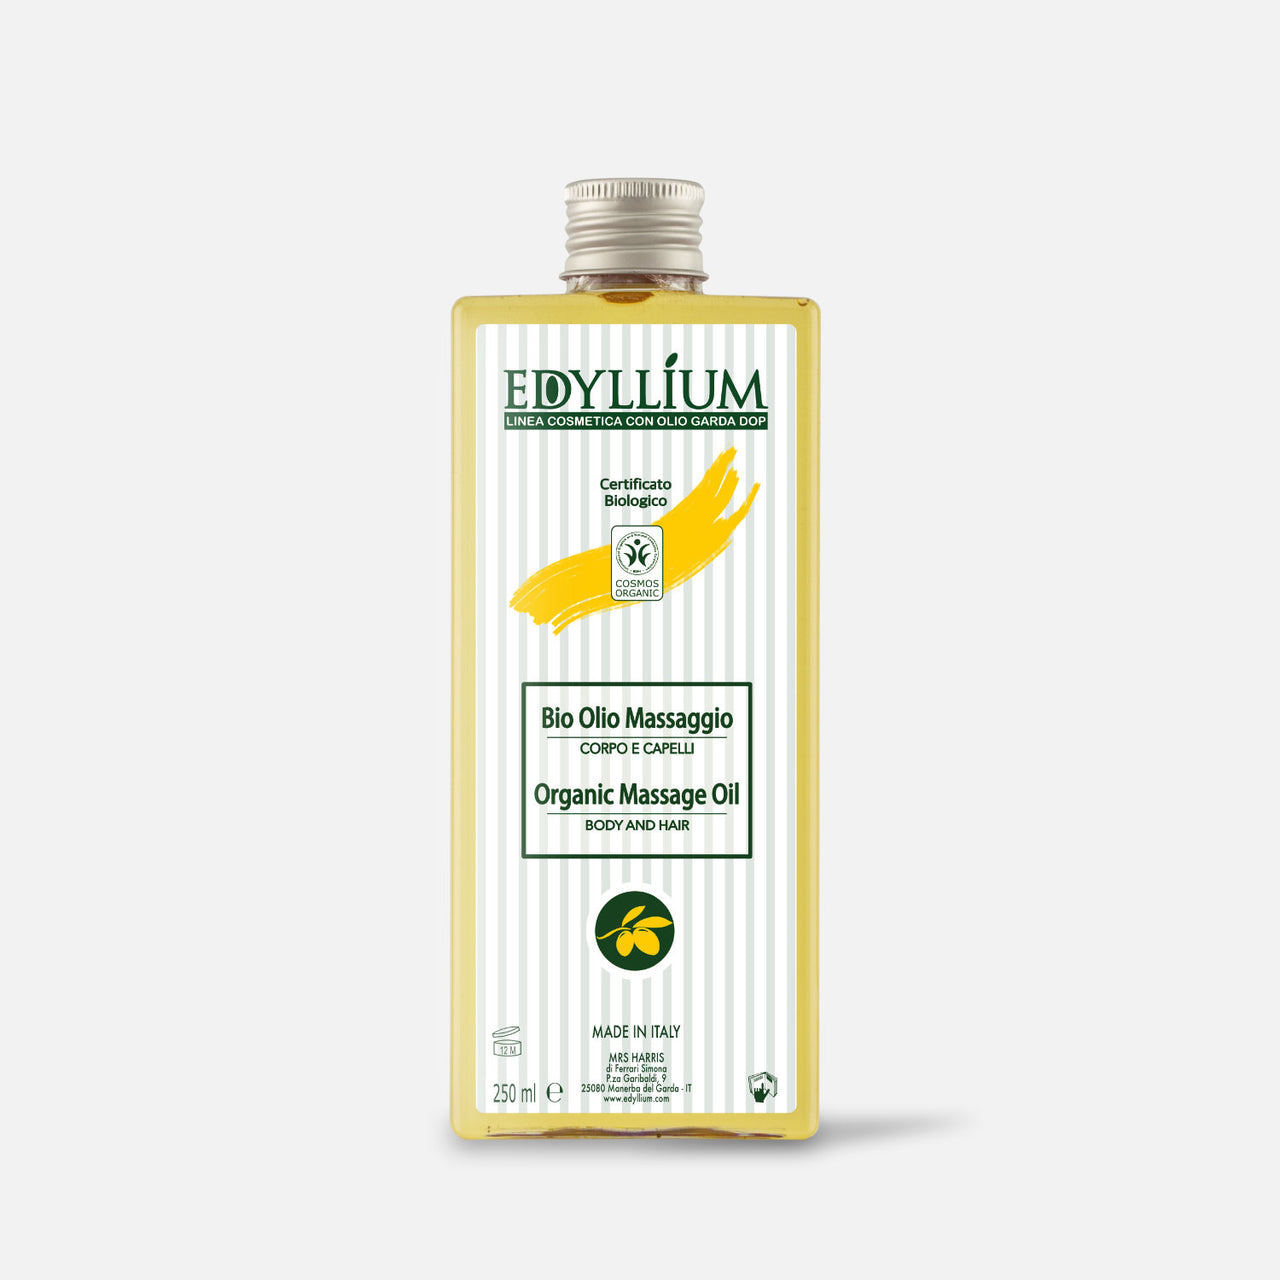 Edyllium bio olio da massaggio con olio di oliva Dop Garda, Olio di Sesamo